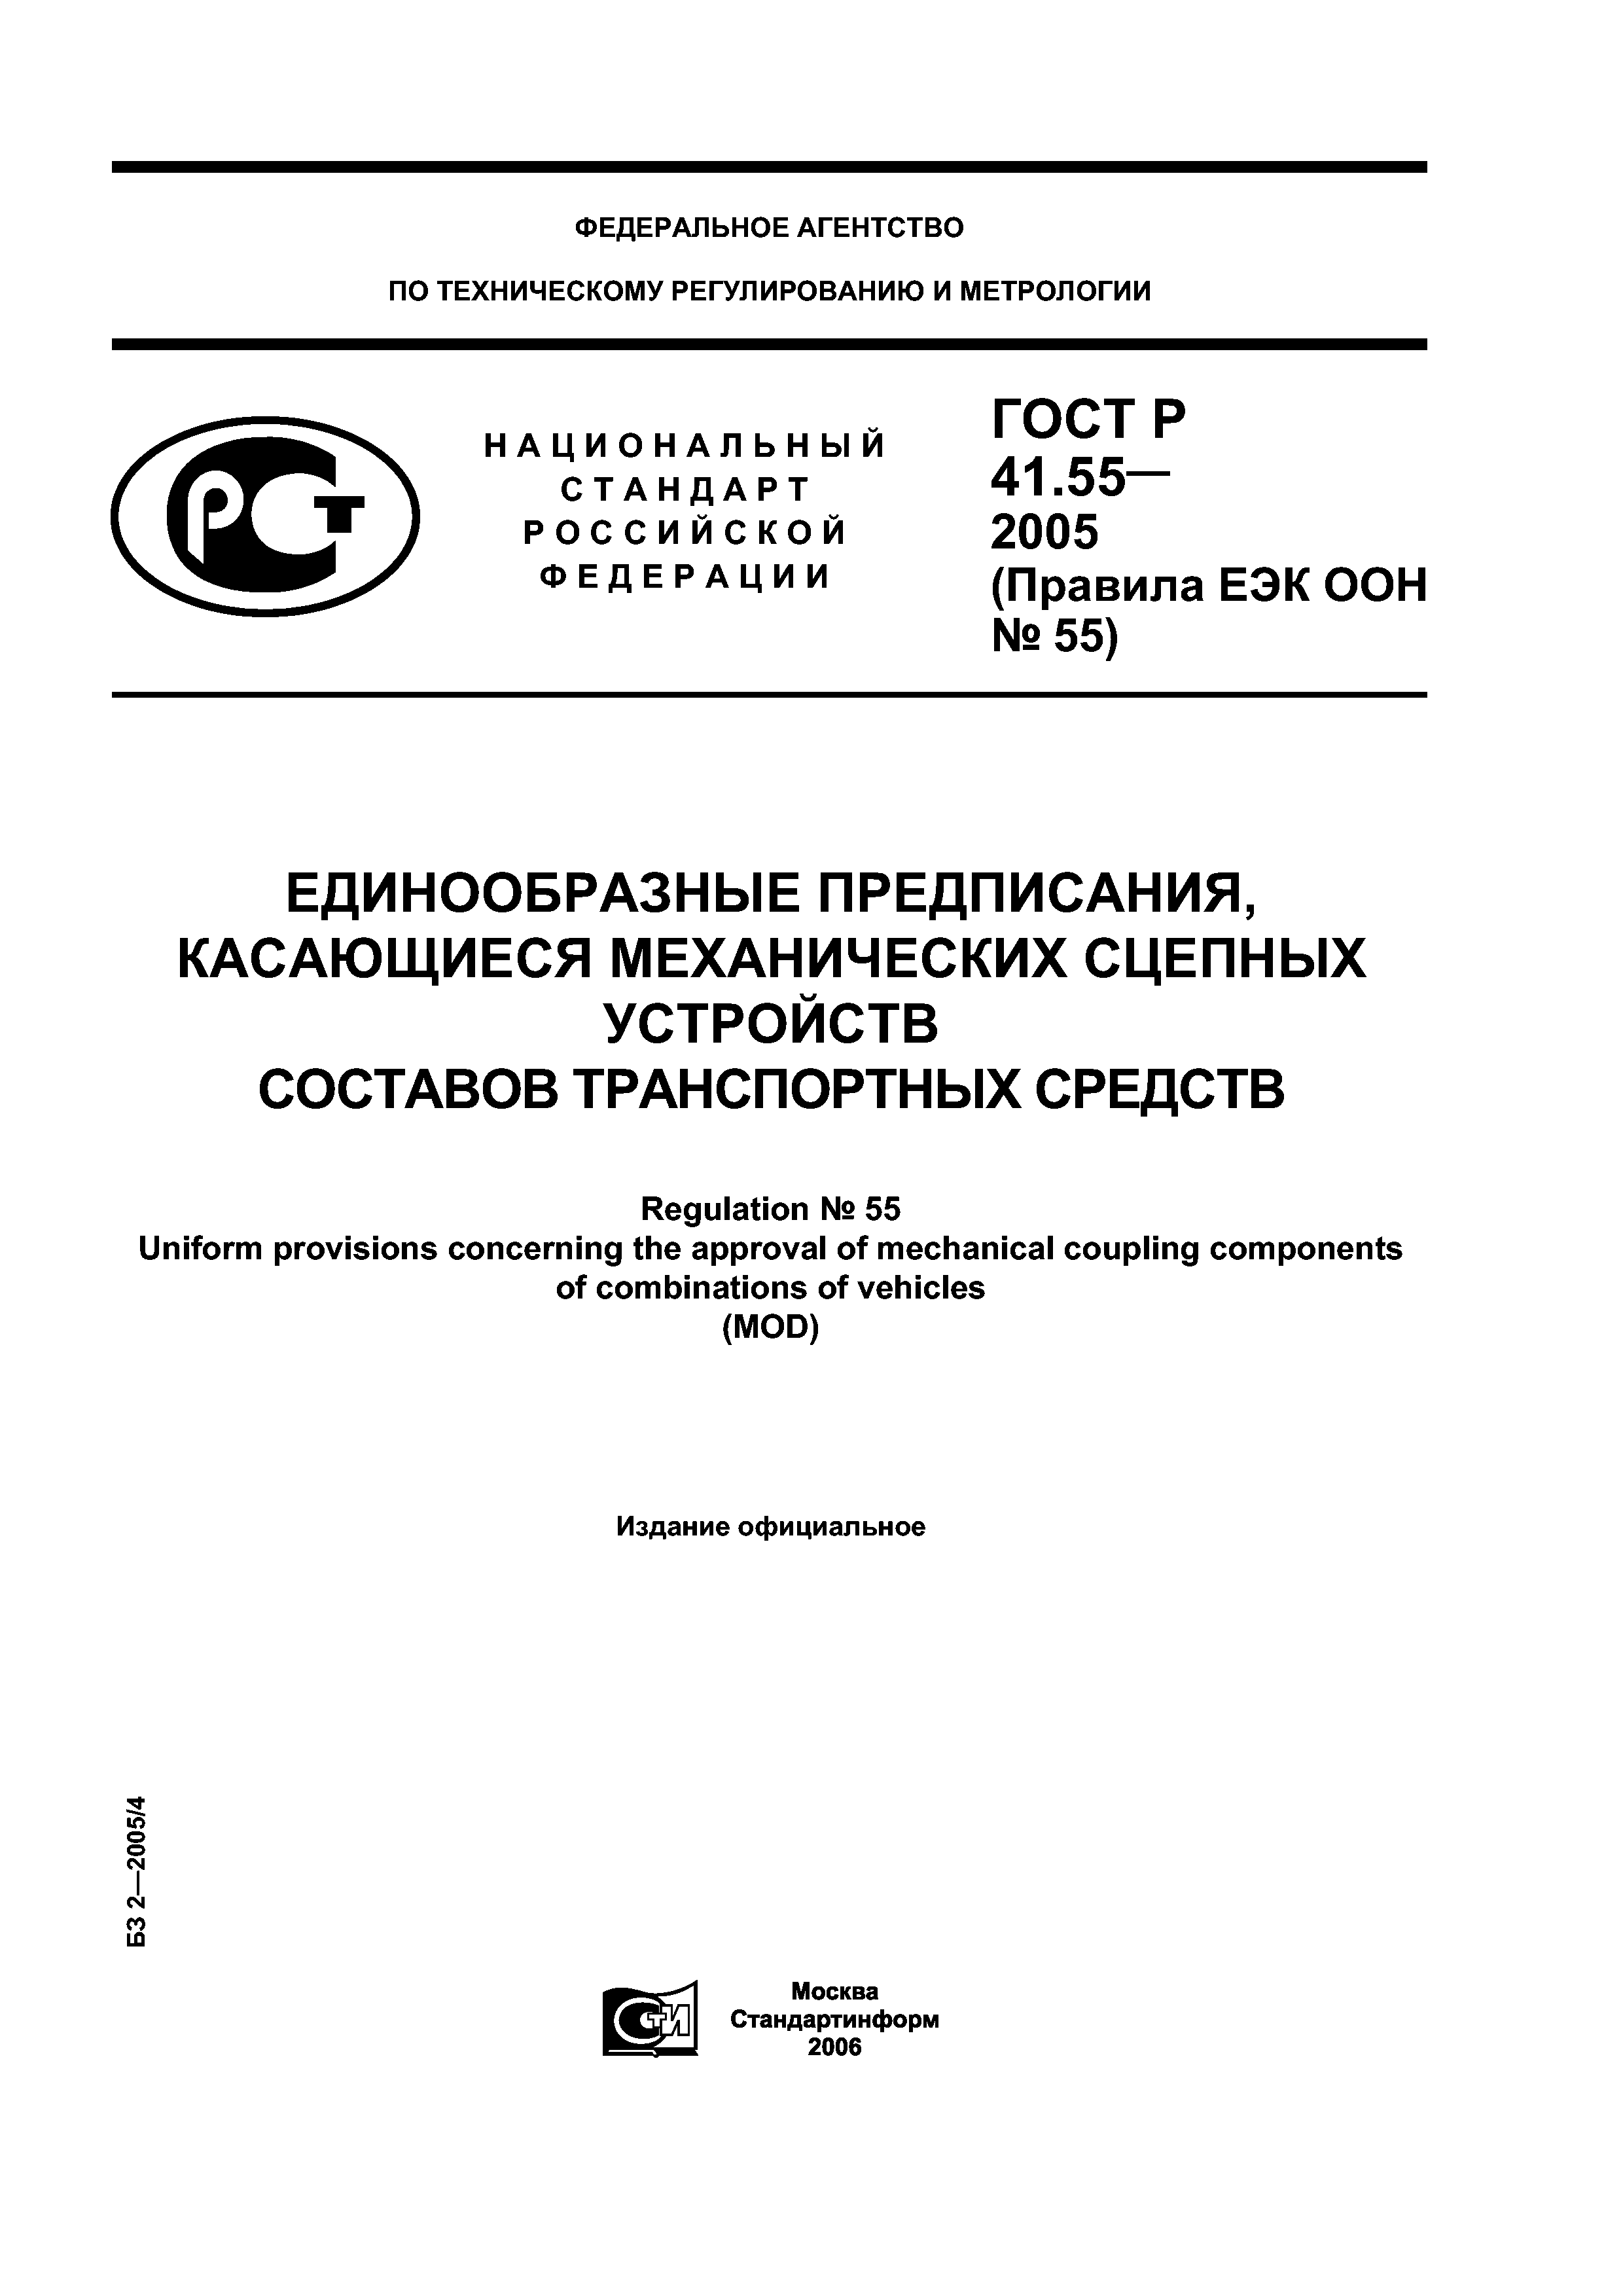 ГОСТ Р 41.55-2005